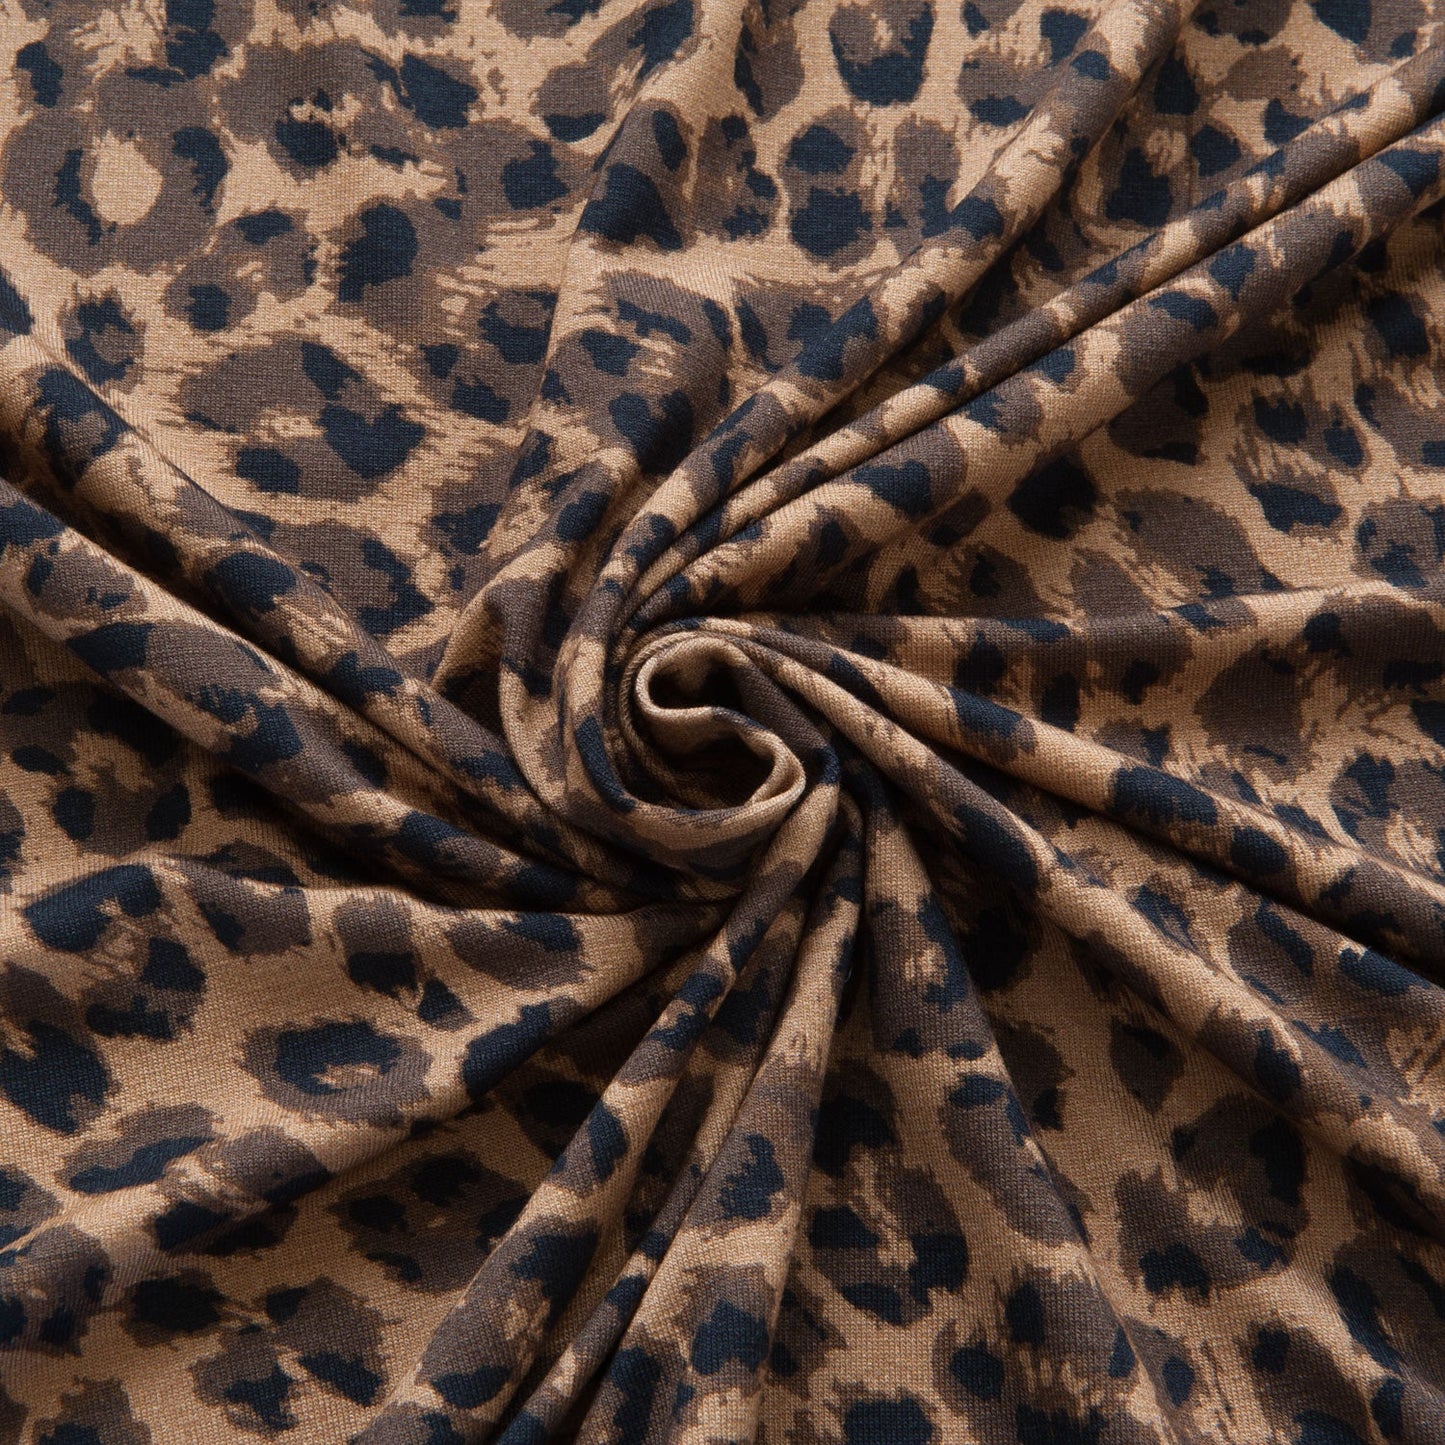 Leopard Viscose Jersey - 2.5m Piece